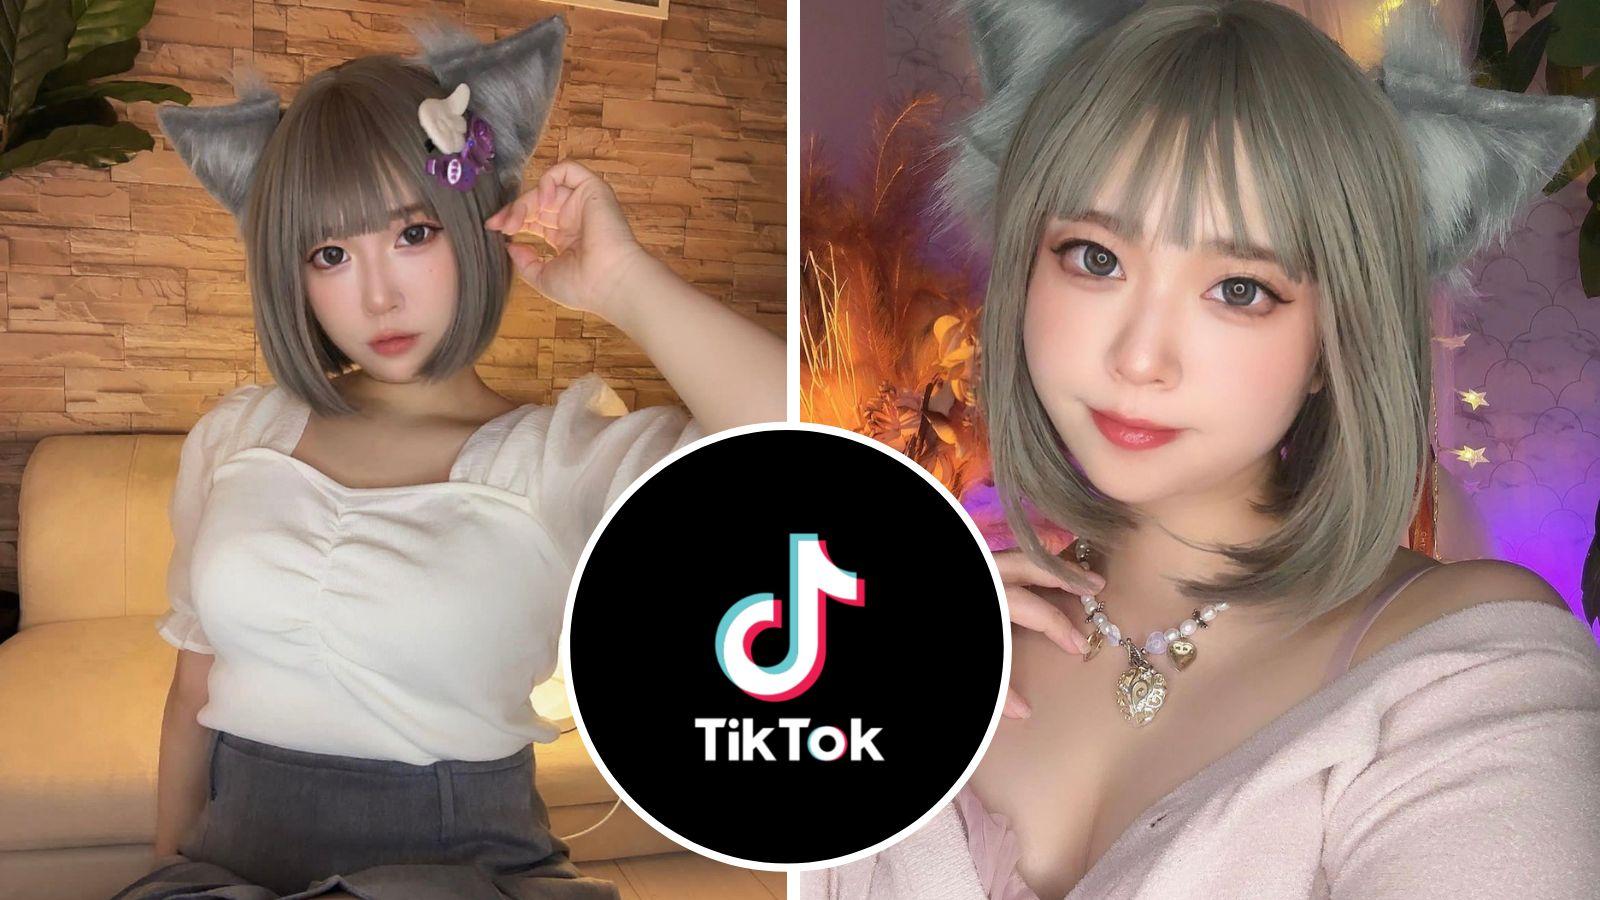 Queen” of NPC streams reveals why she started TikTok trend - Dexerto